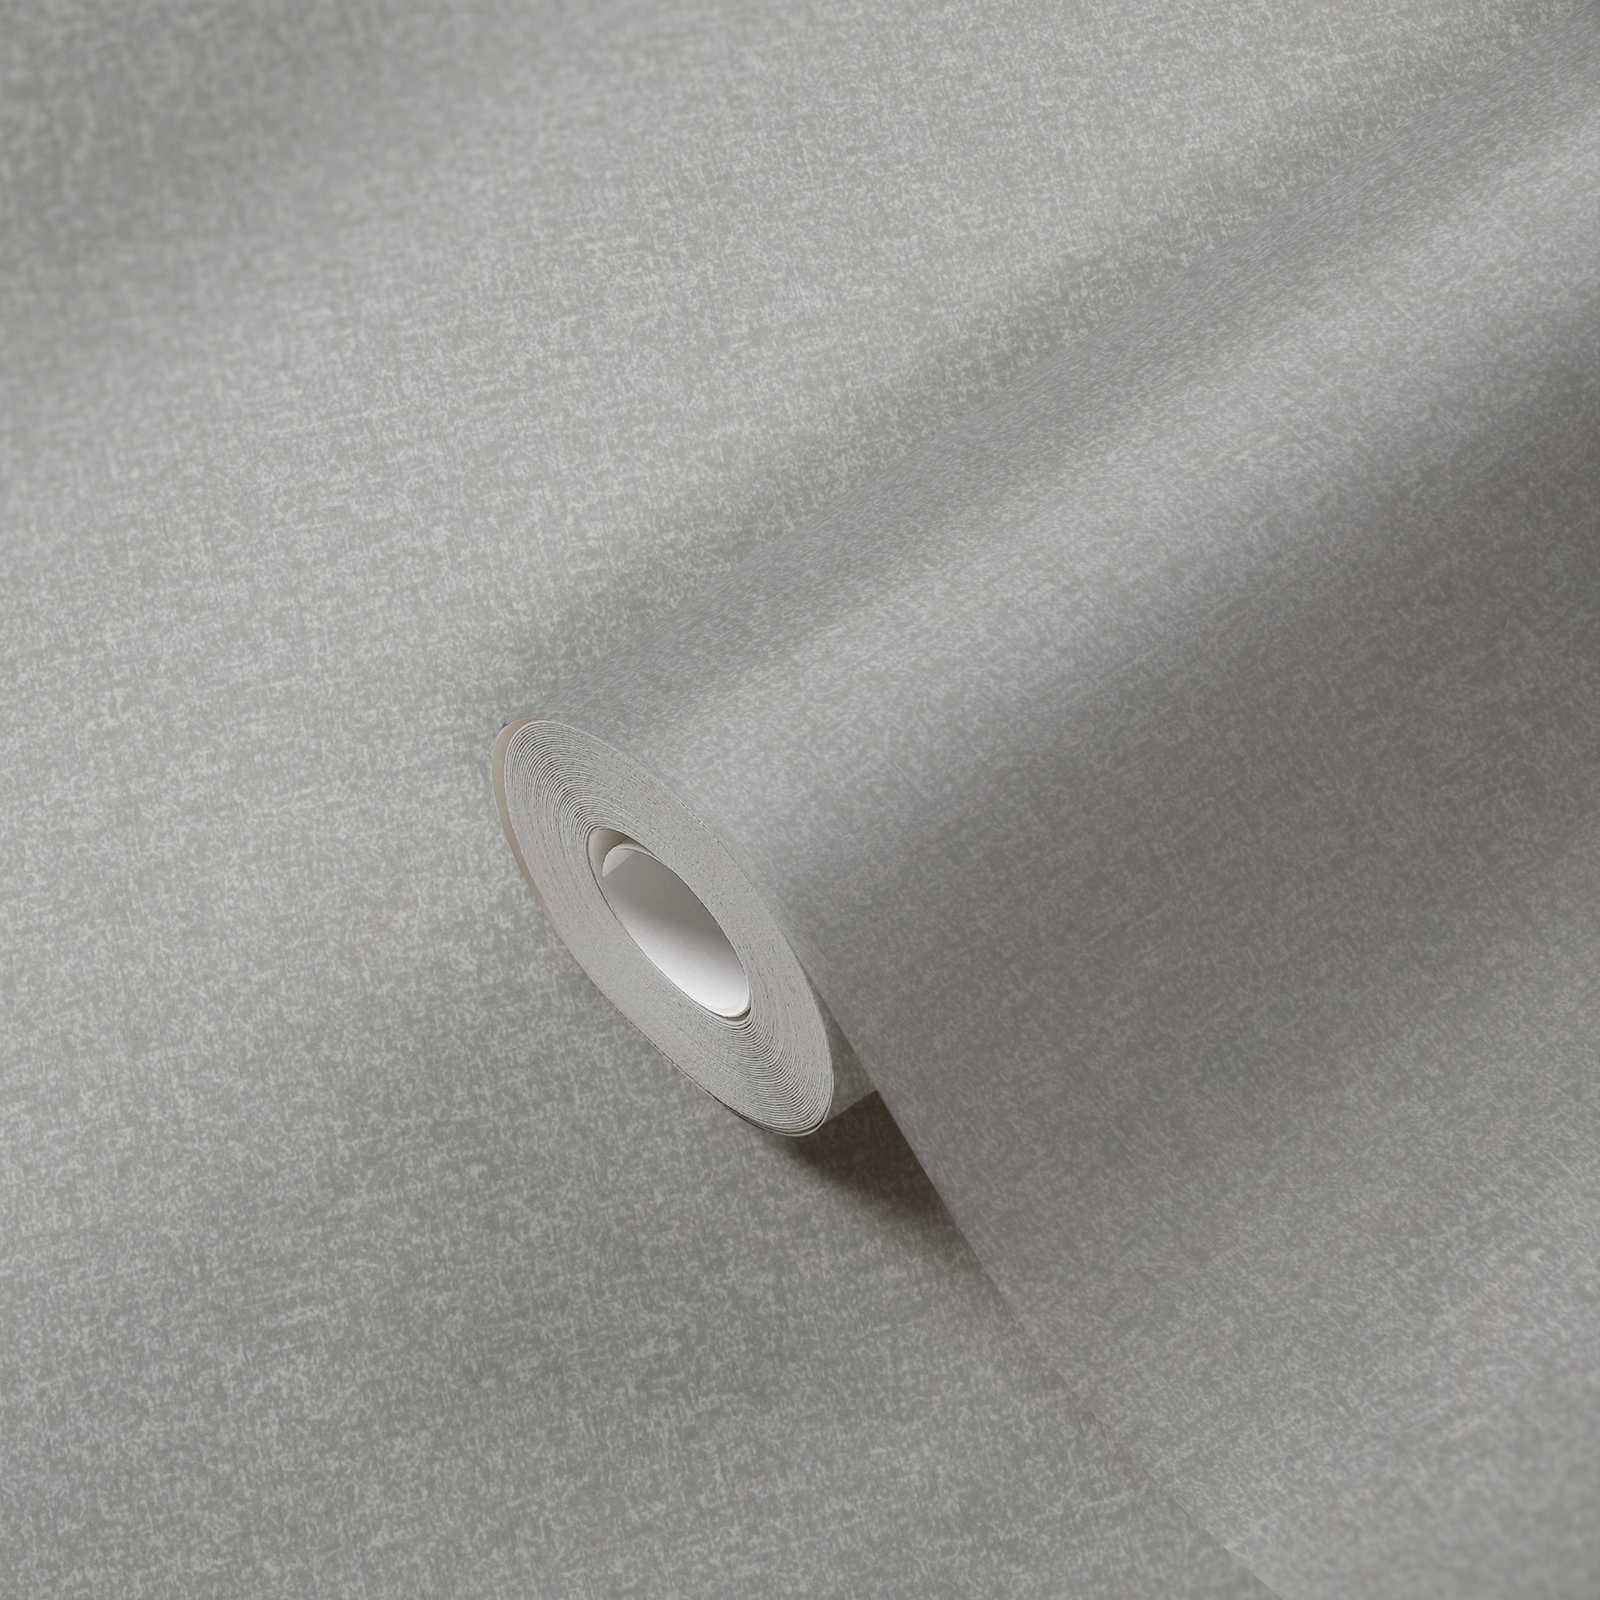             Papel pintado no tejido liso con textura ligera - gris
        